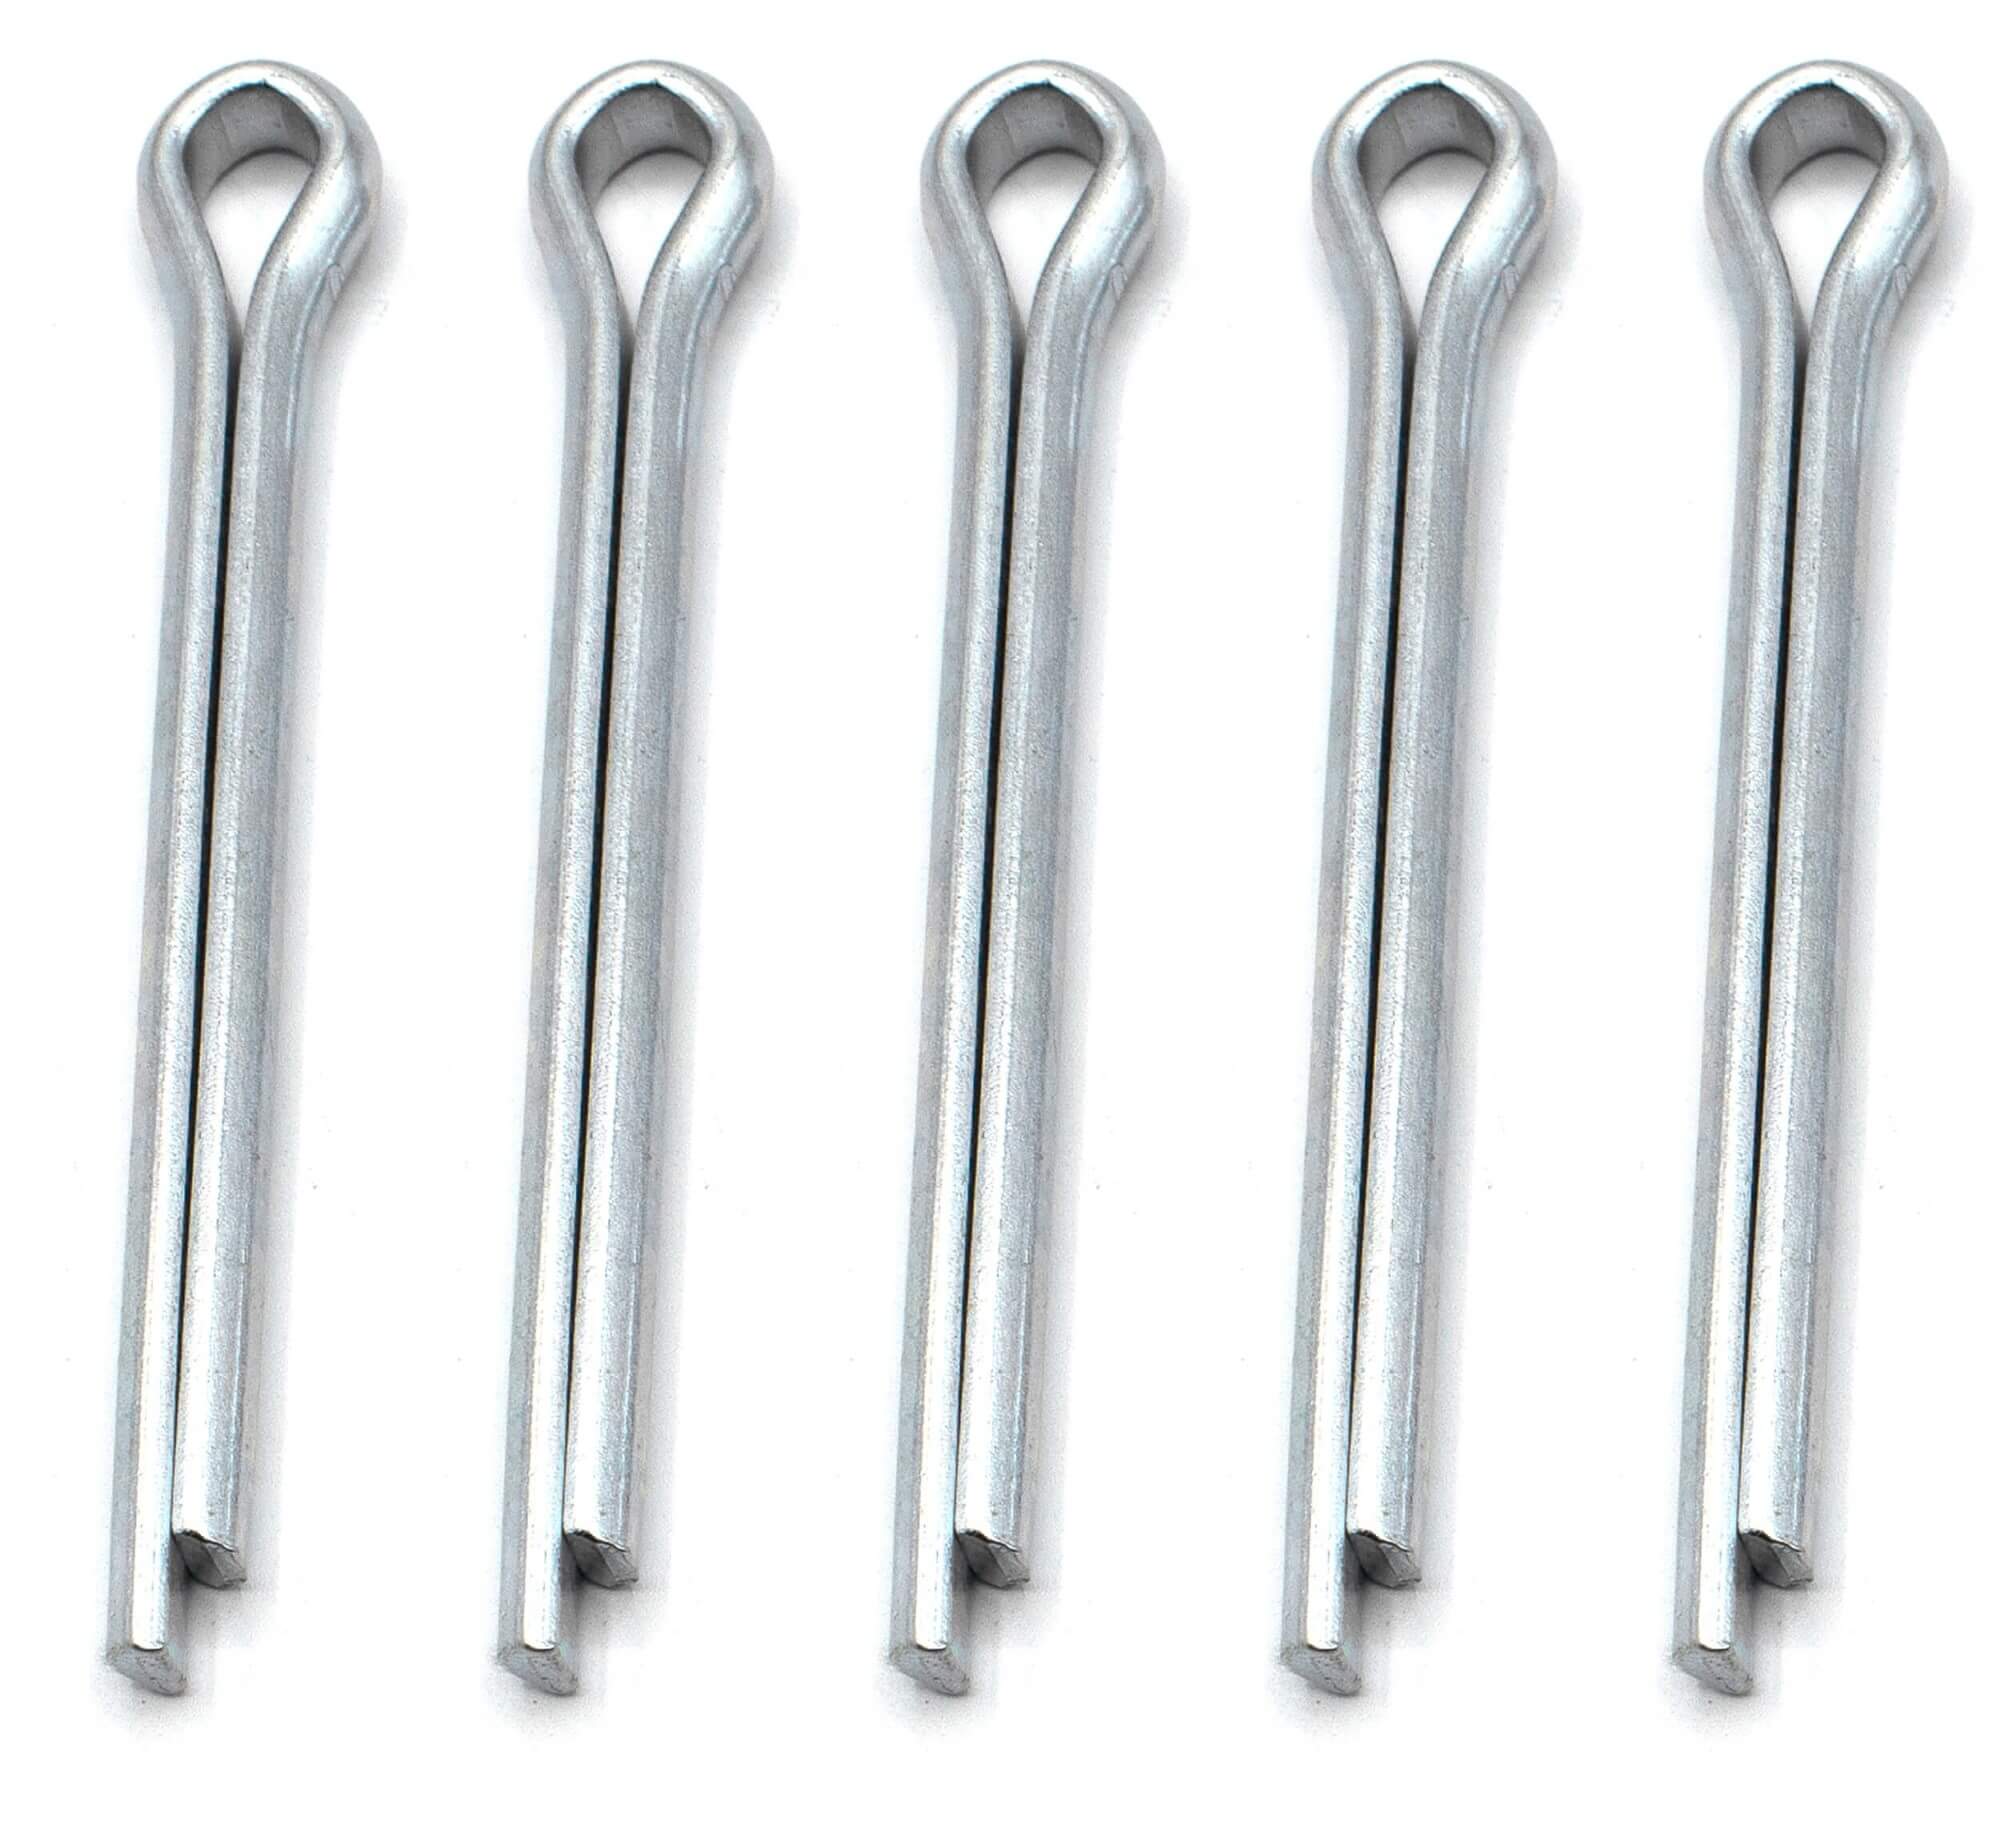 Sicherungssplint Splinte Sicherungssplinte Splint verzinkt 2mm x 20mm (10 Stück) Stecksplint Stecksplinte